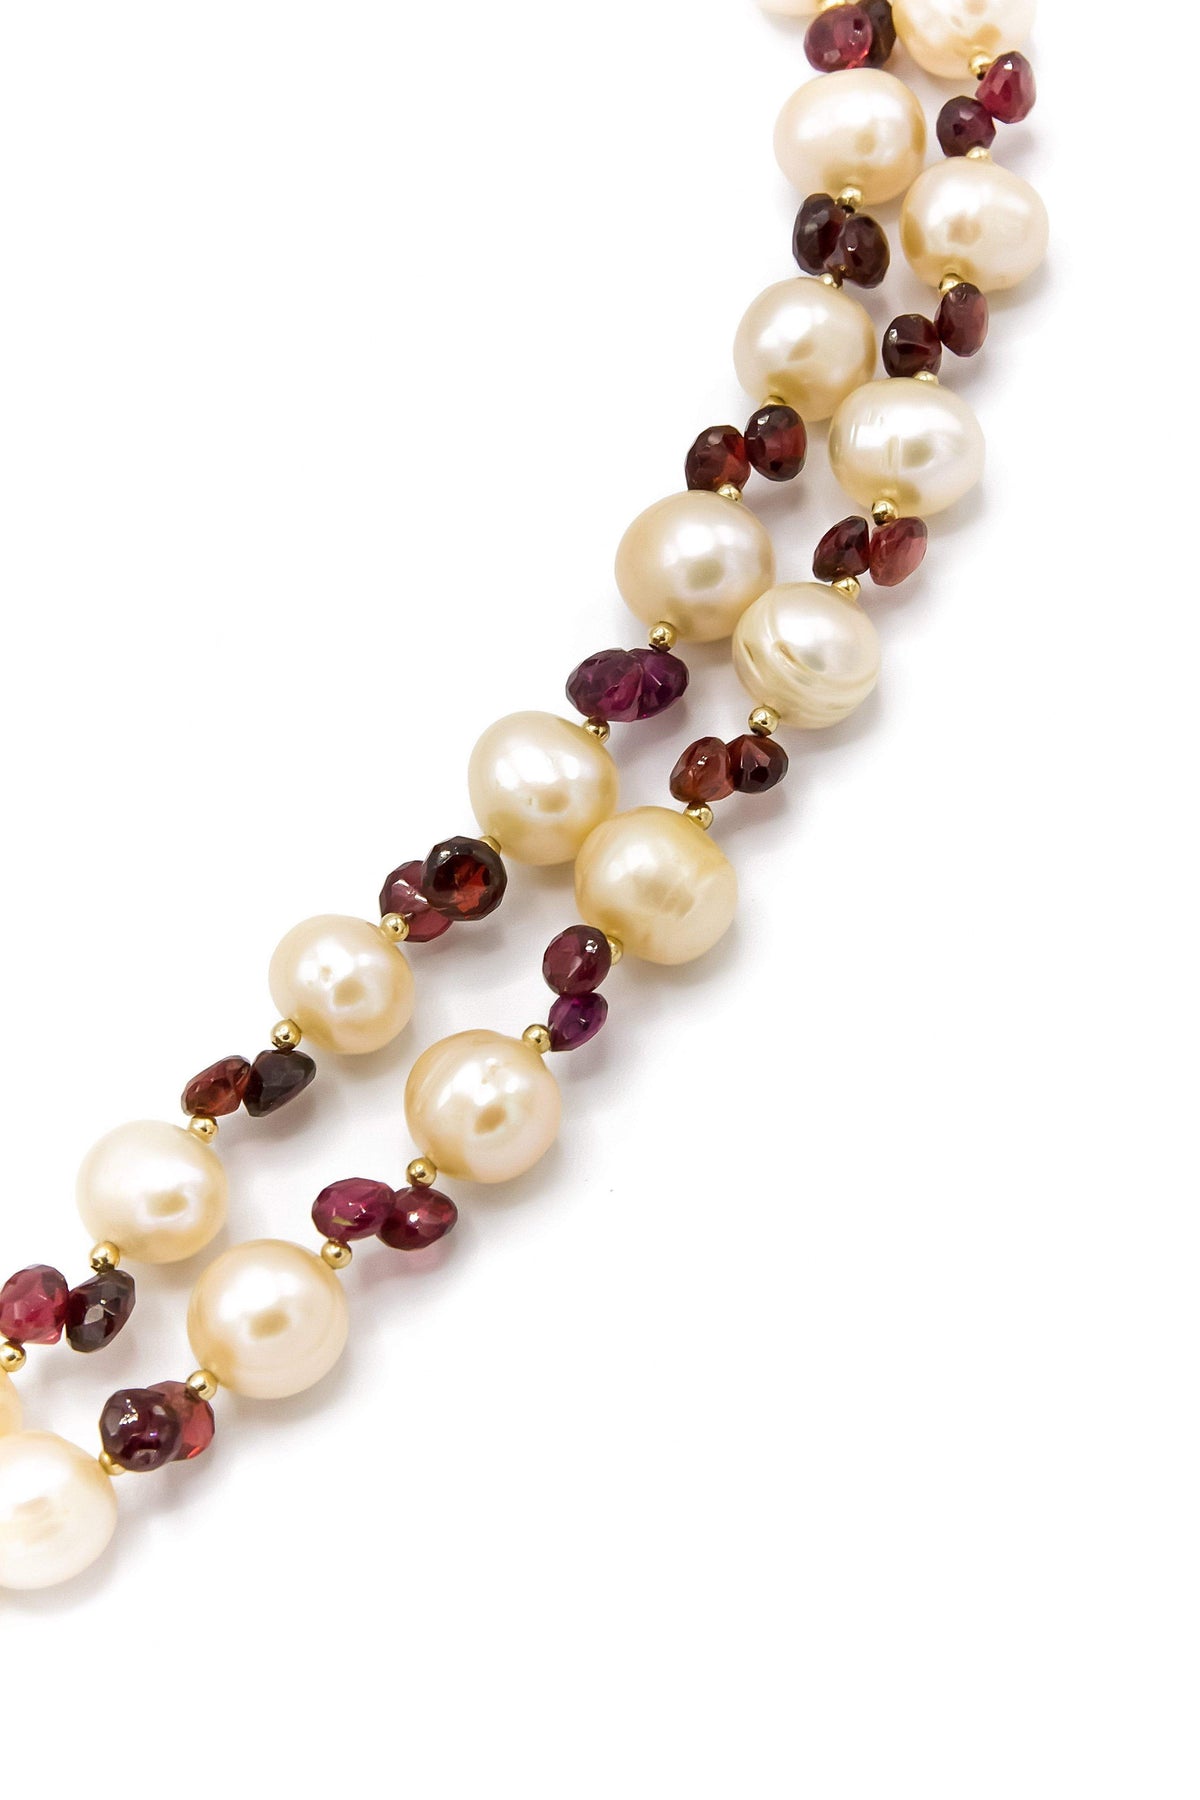 Buy Peach Pearl & Garnet Necklace Online - Gemstones Jewelry Store NYC ...